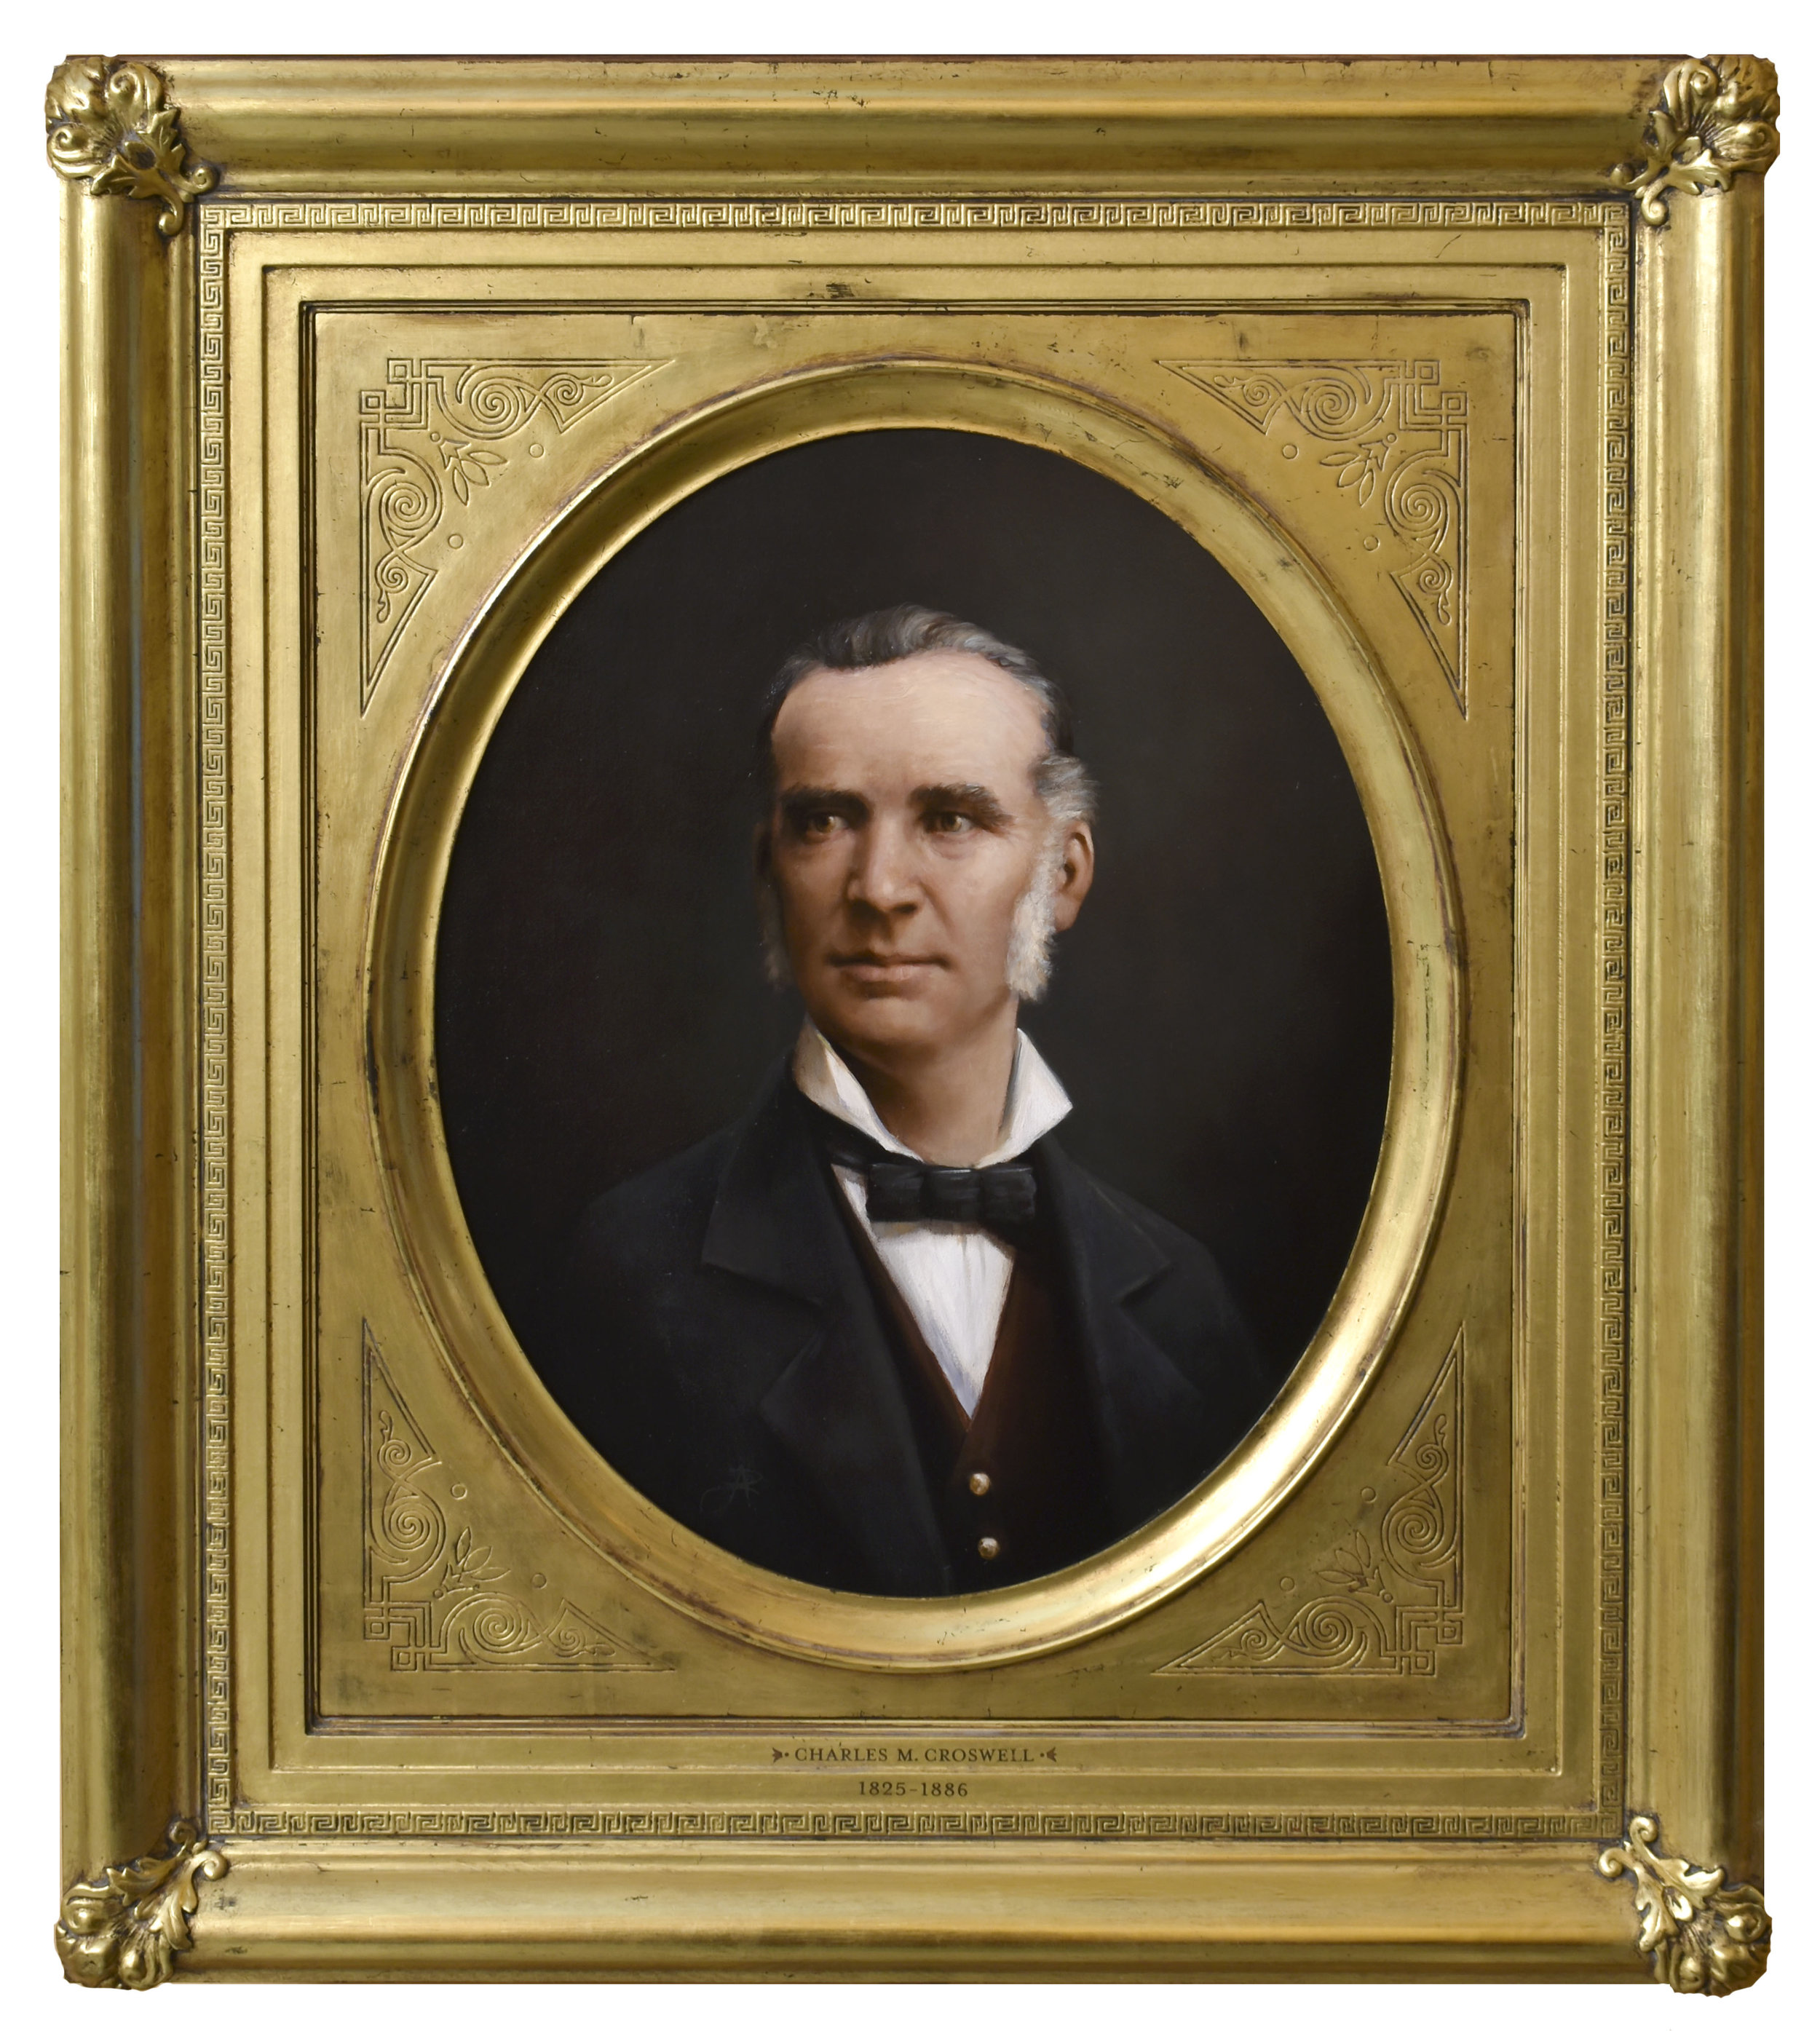 Governor Charles M. Croswell, Michigan